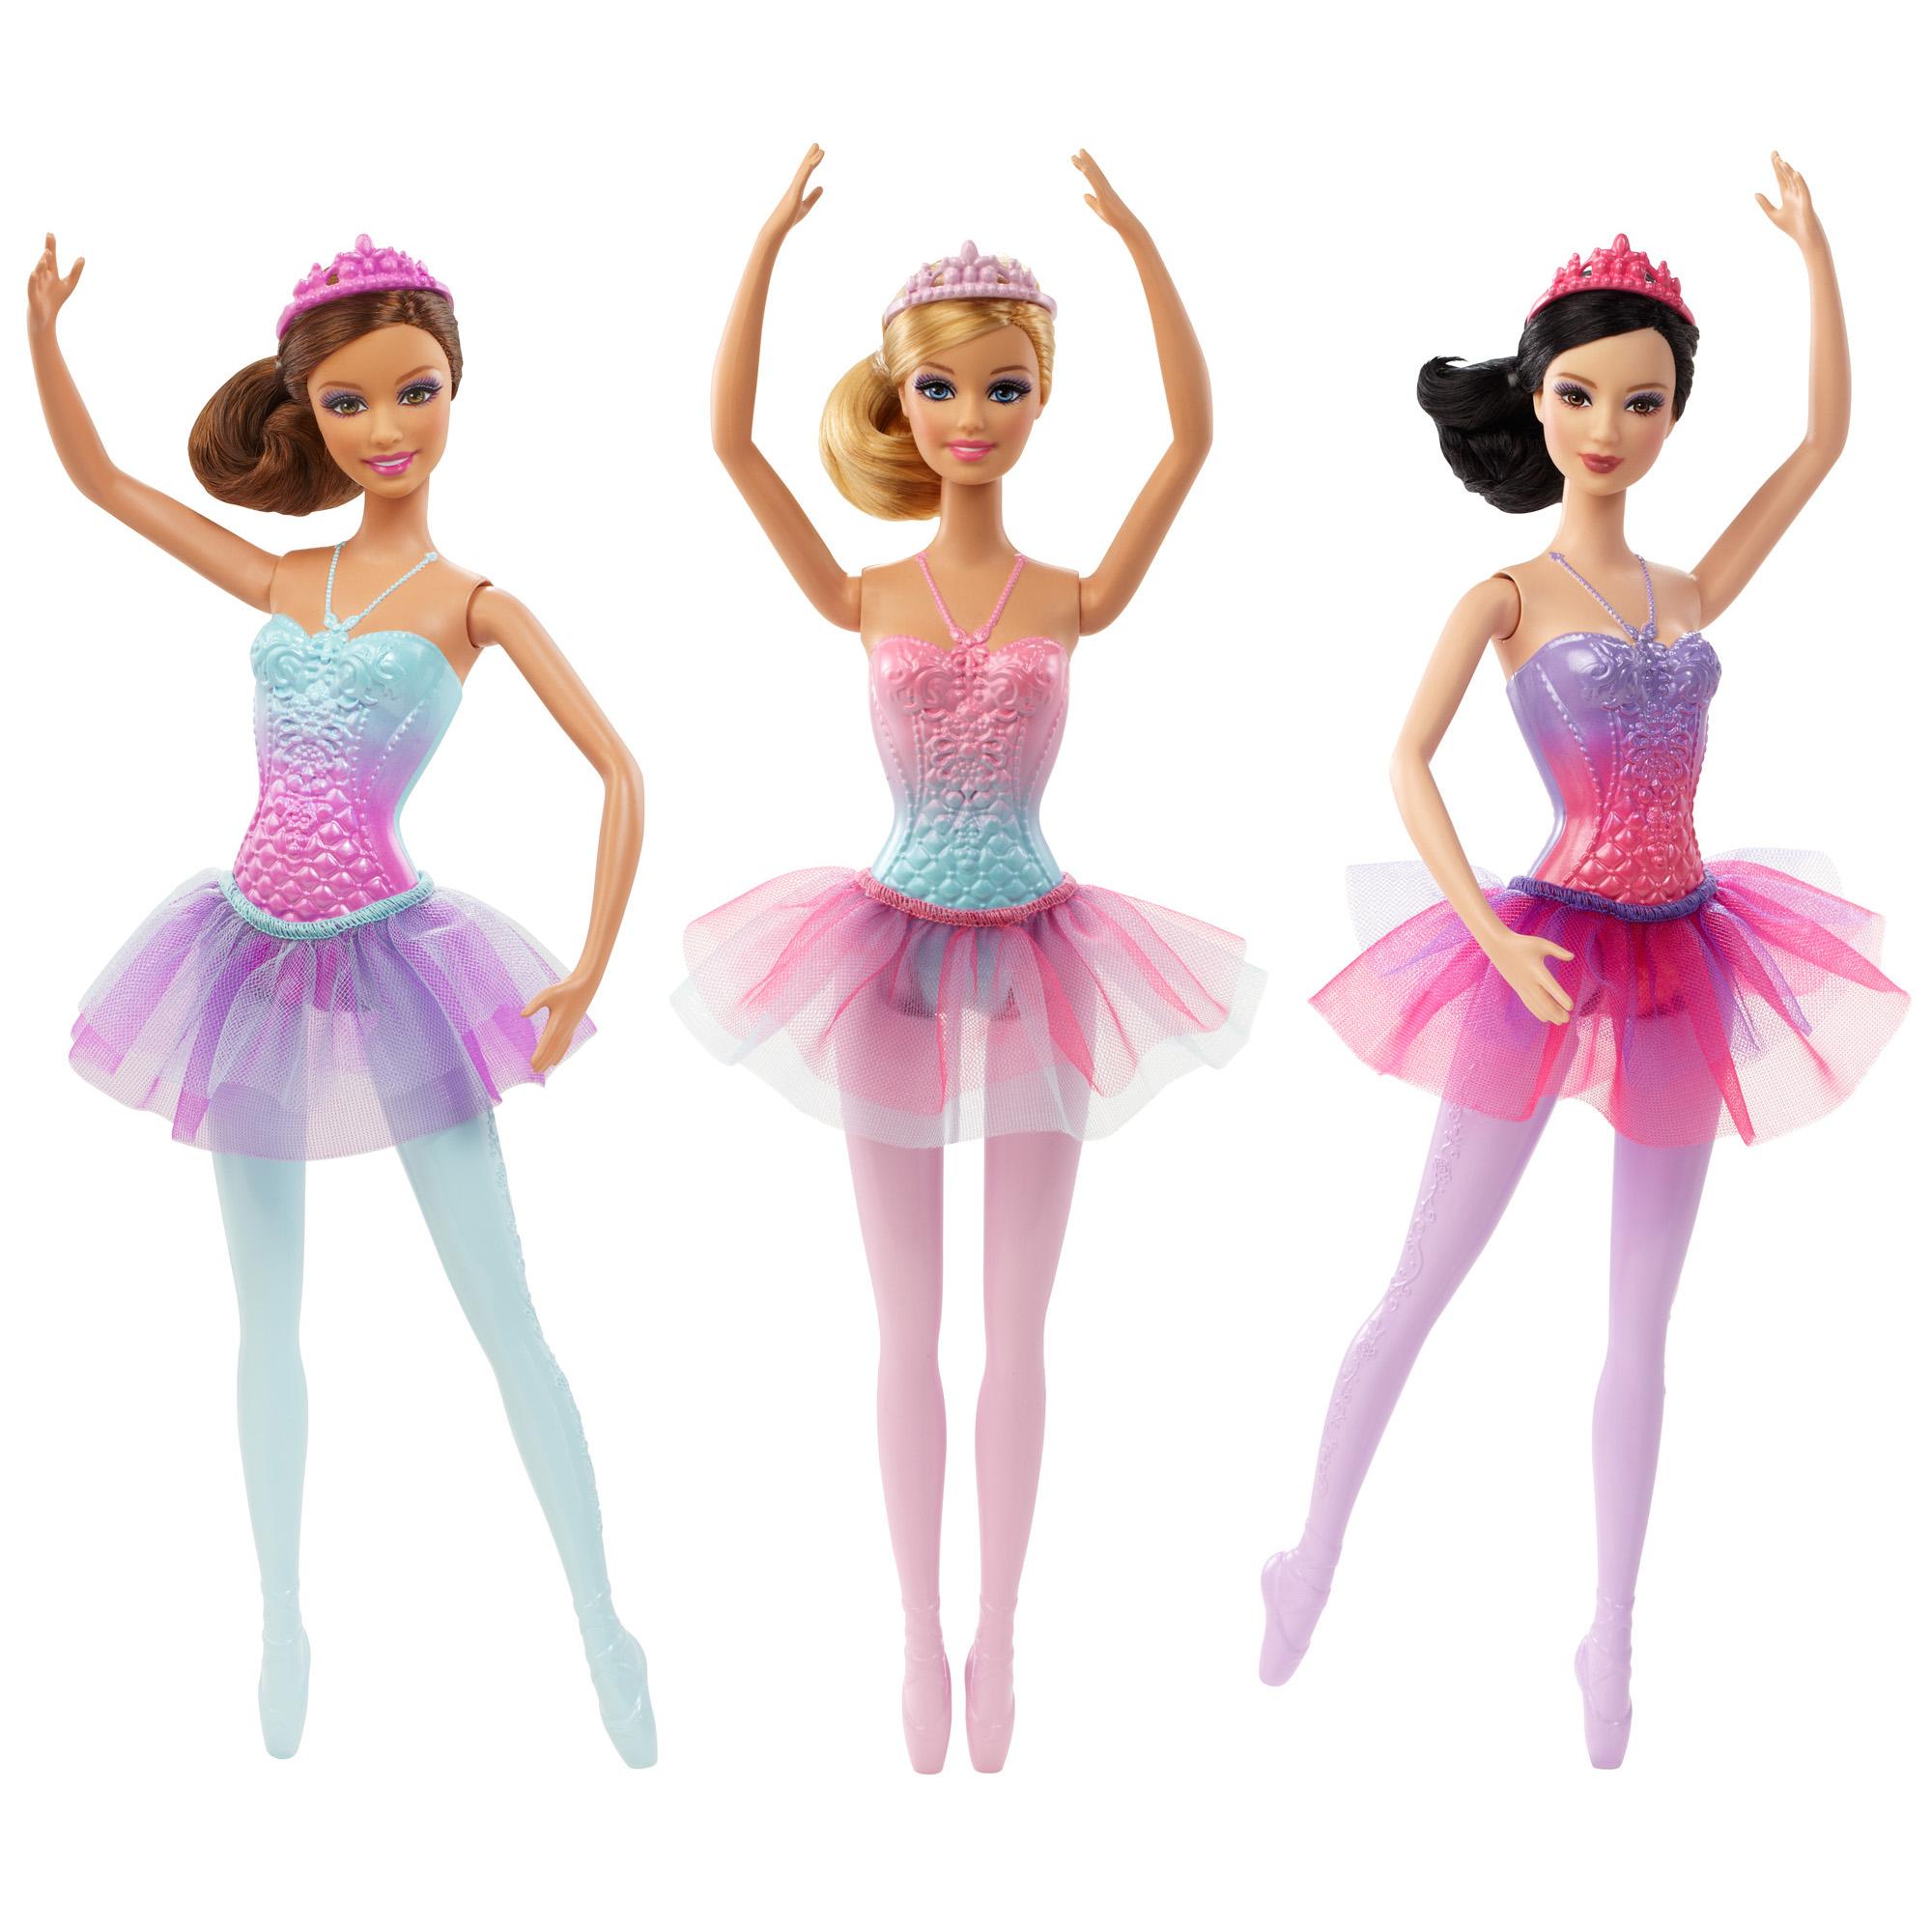 Barbie Ballerina Doll Assortment - £9.00 - Hamleys for Barbie ...